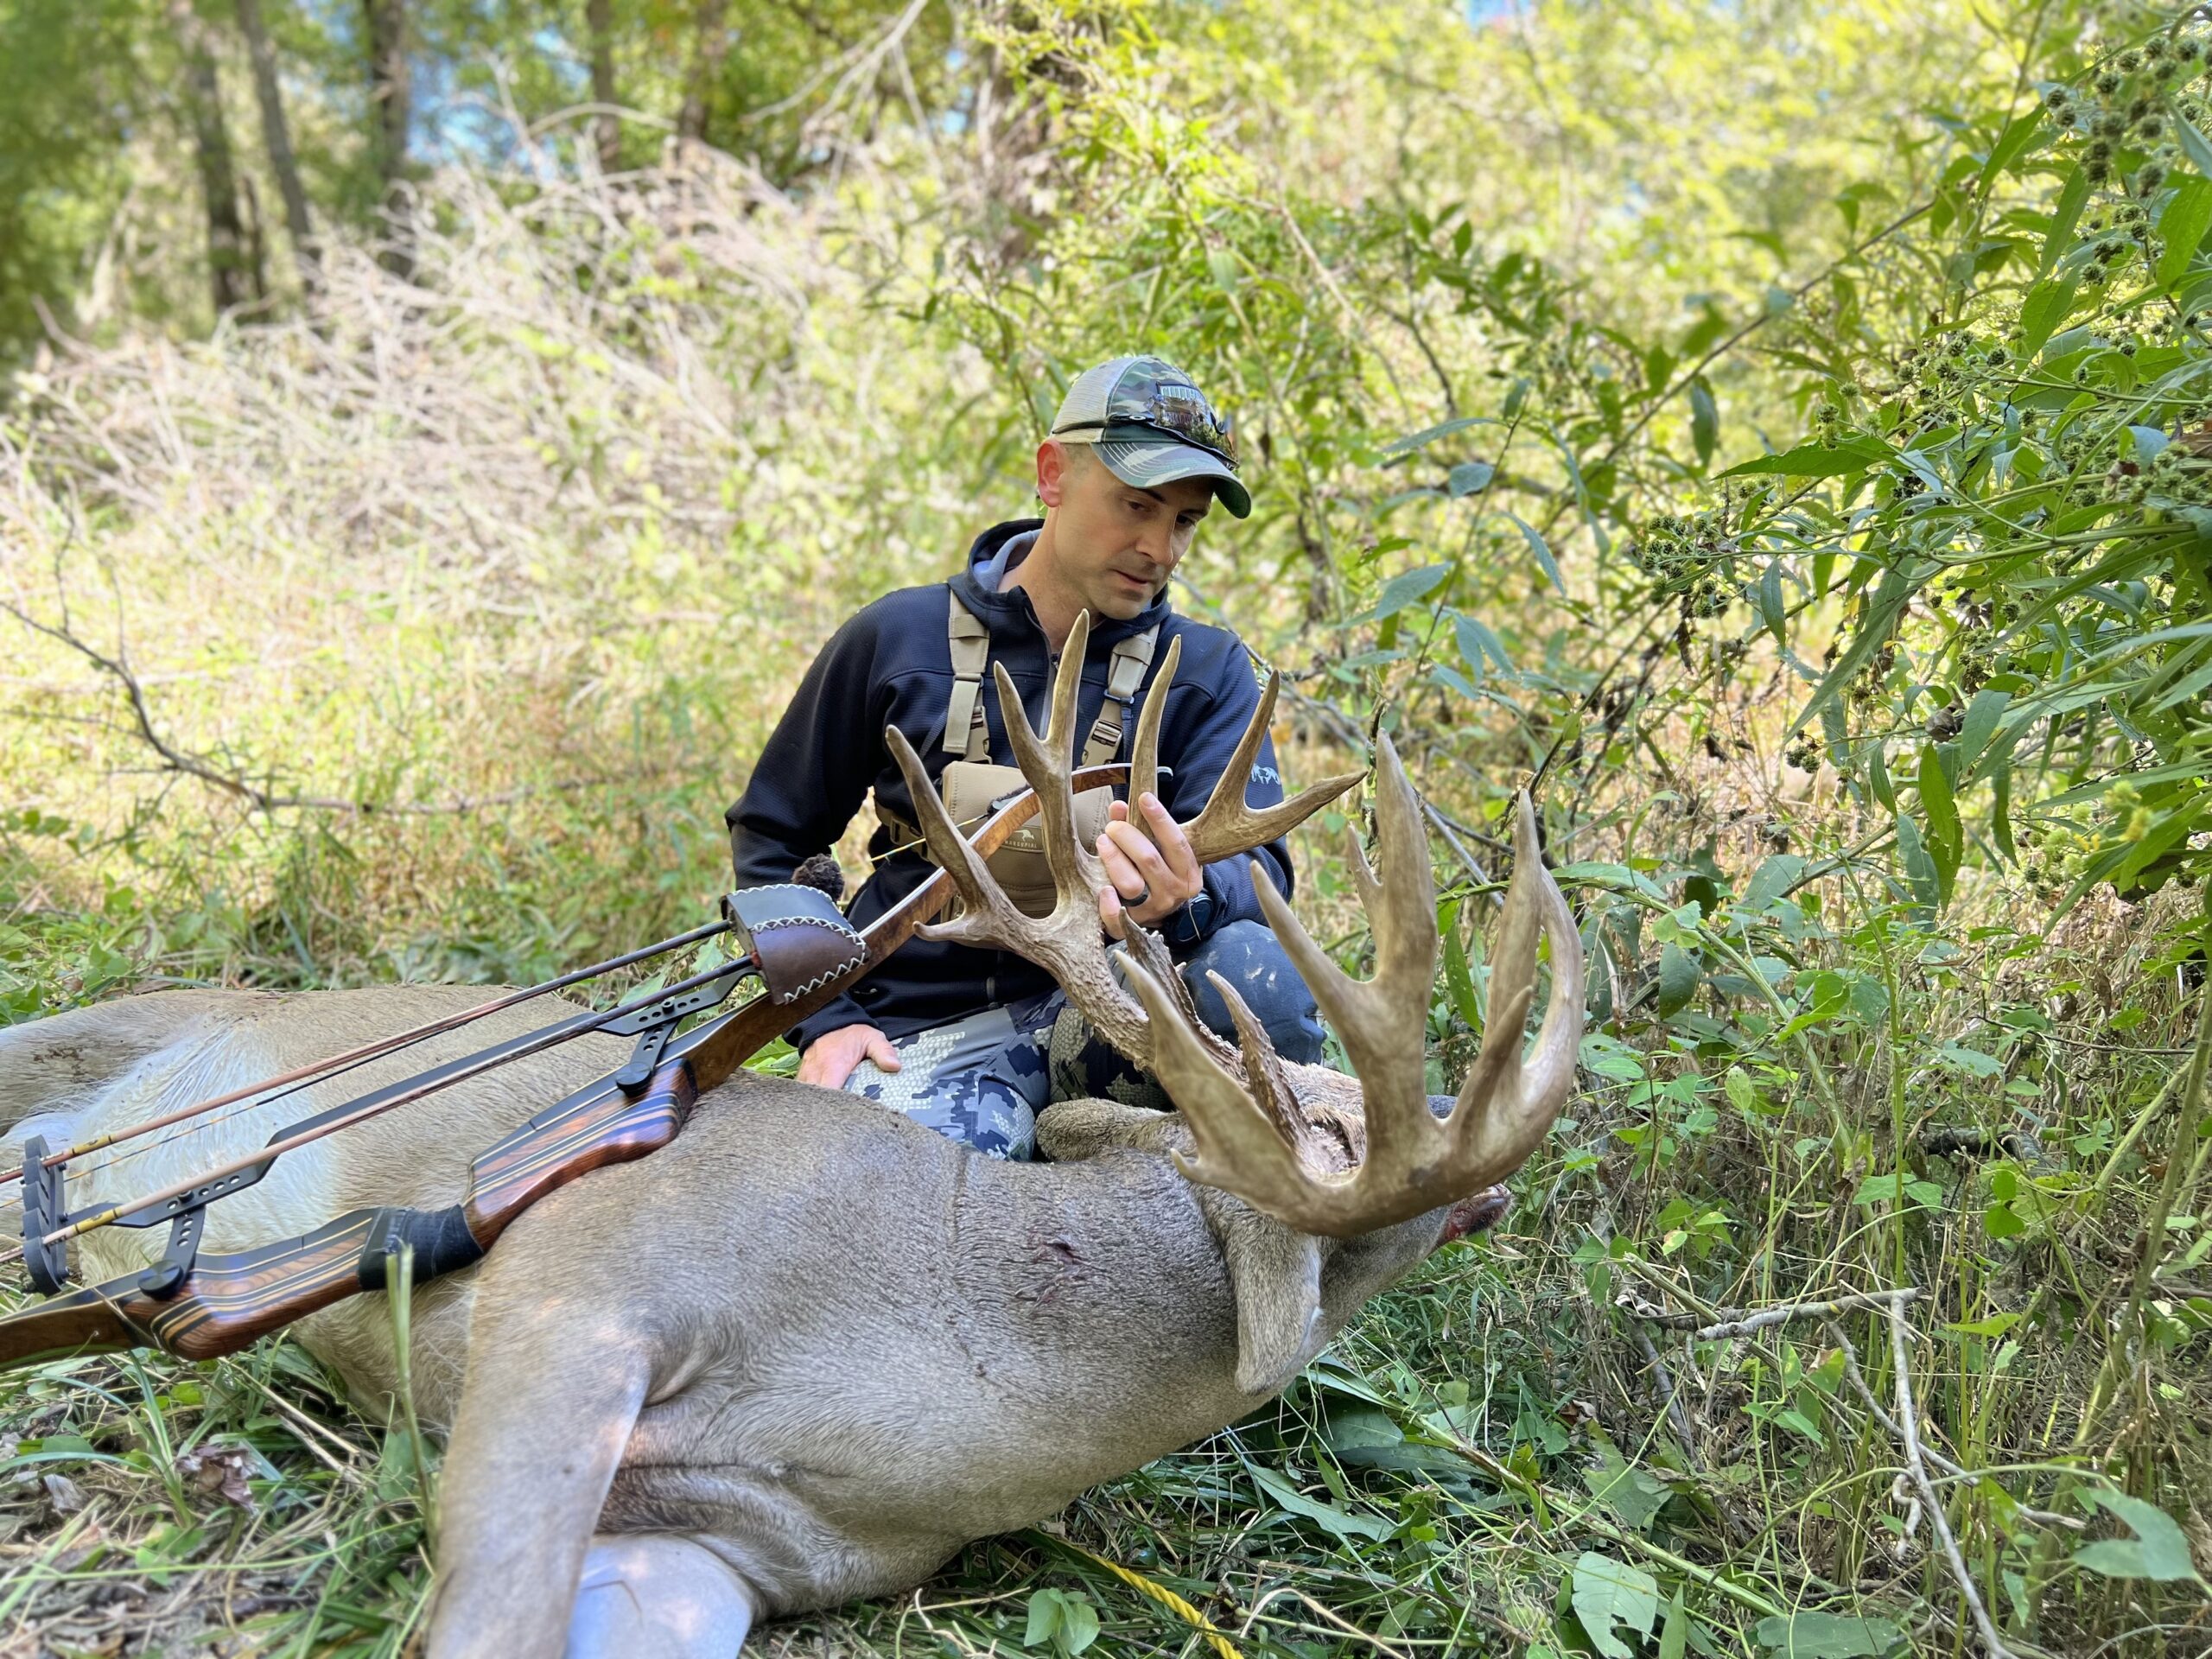 Missouri Recurve Hunter Tags Massive Buck That “Can’t Be Killed”